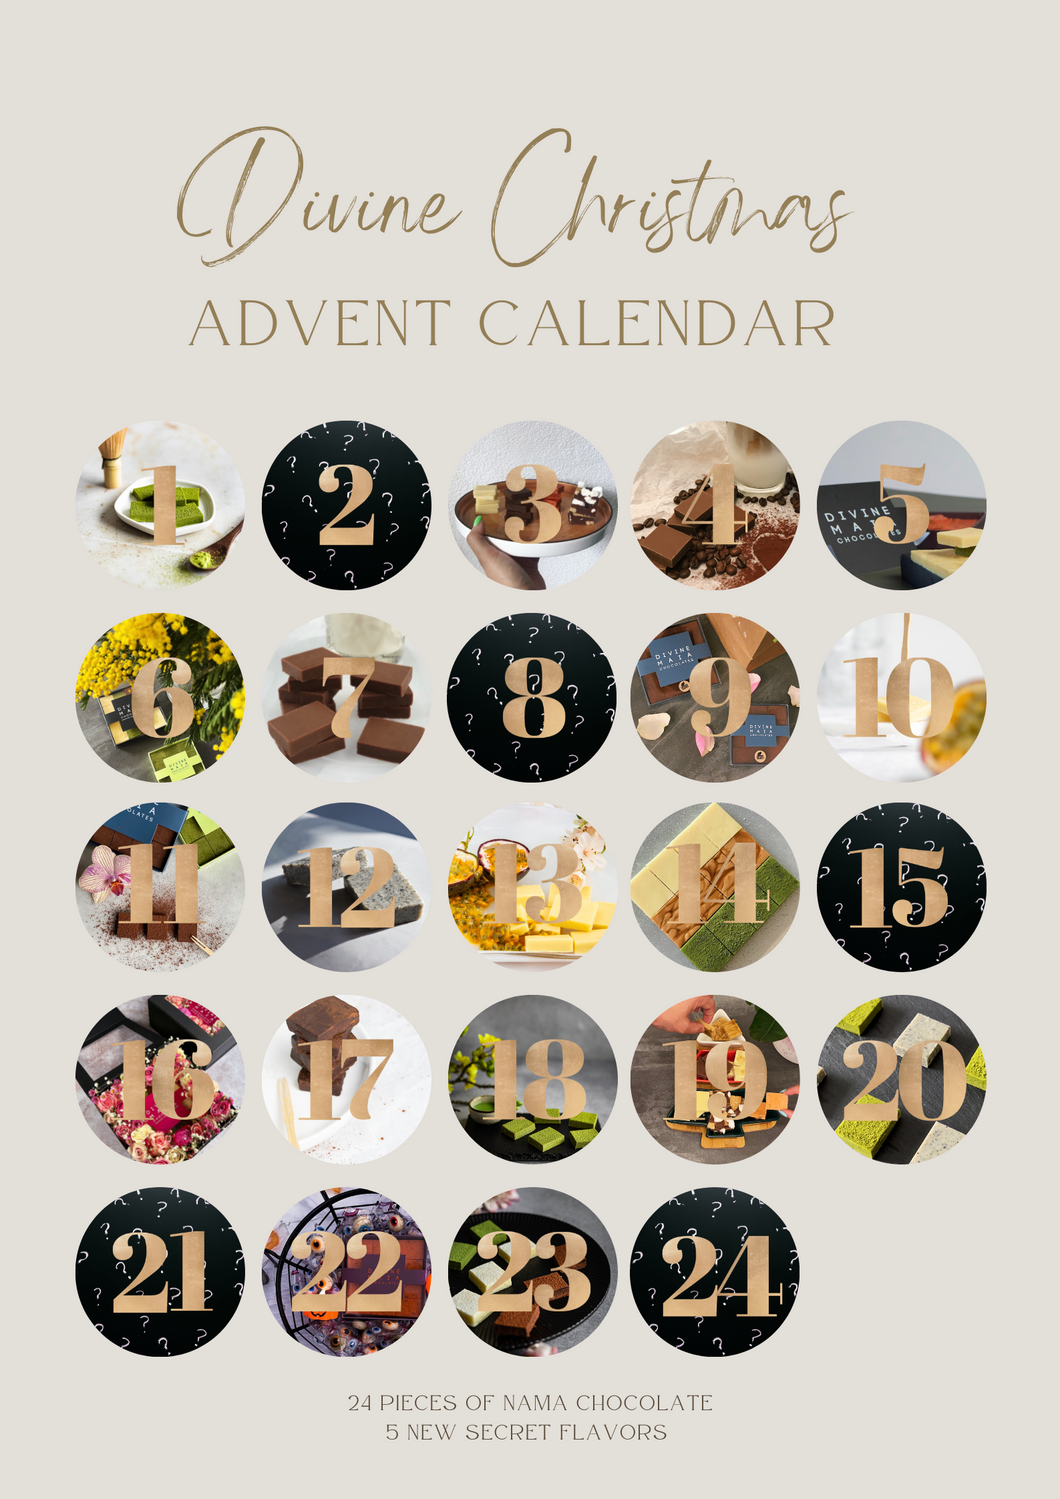 2022 Divine Christmas Advent Calendar 2022 (pre-order 28 november) UITVERKOCHT